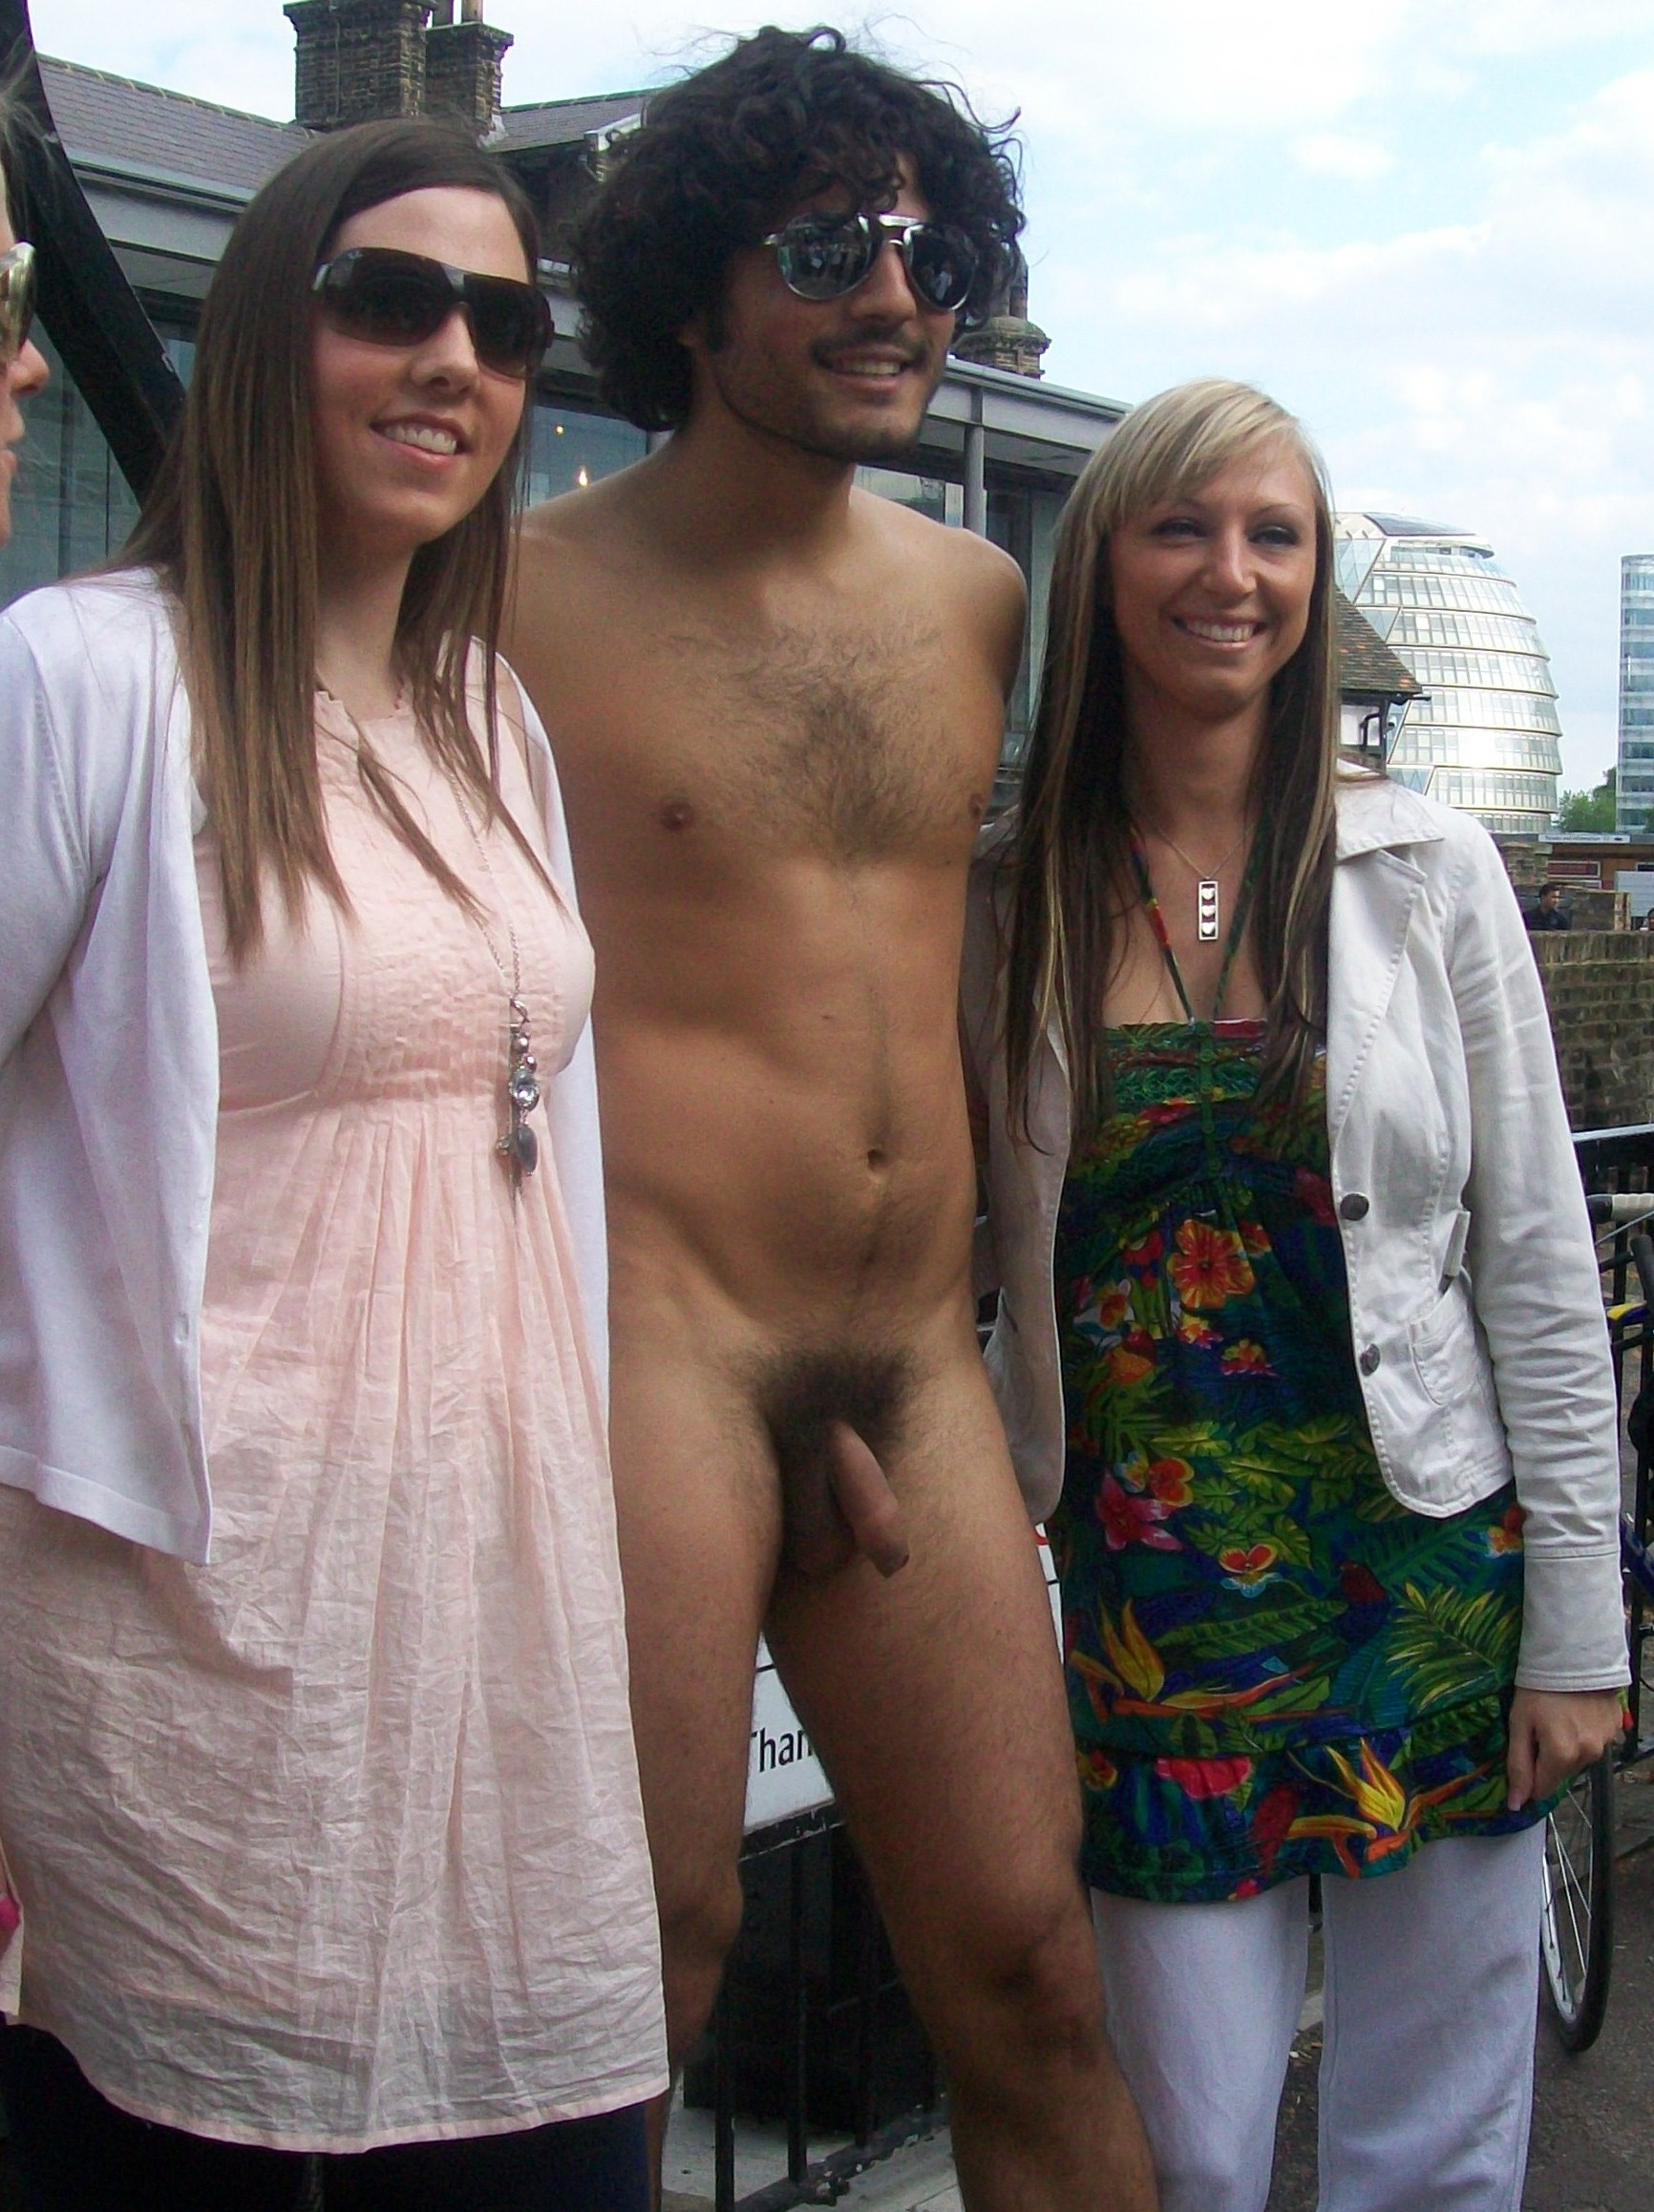 angie fanara add naked men clothed females photo